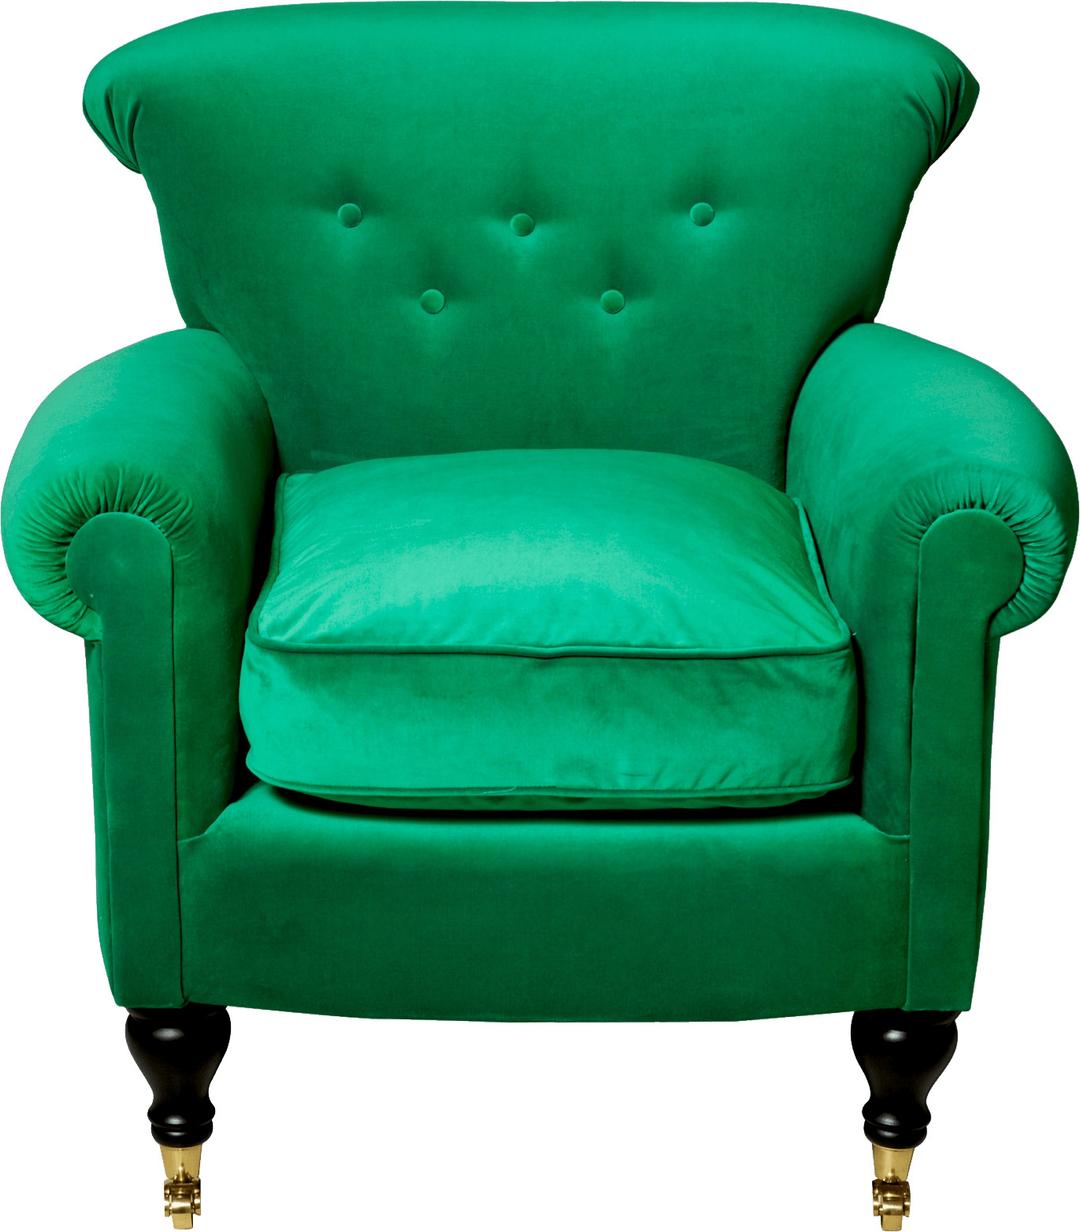 Comfy Green Armchair png transparent